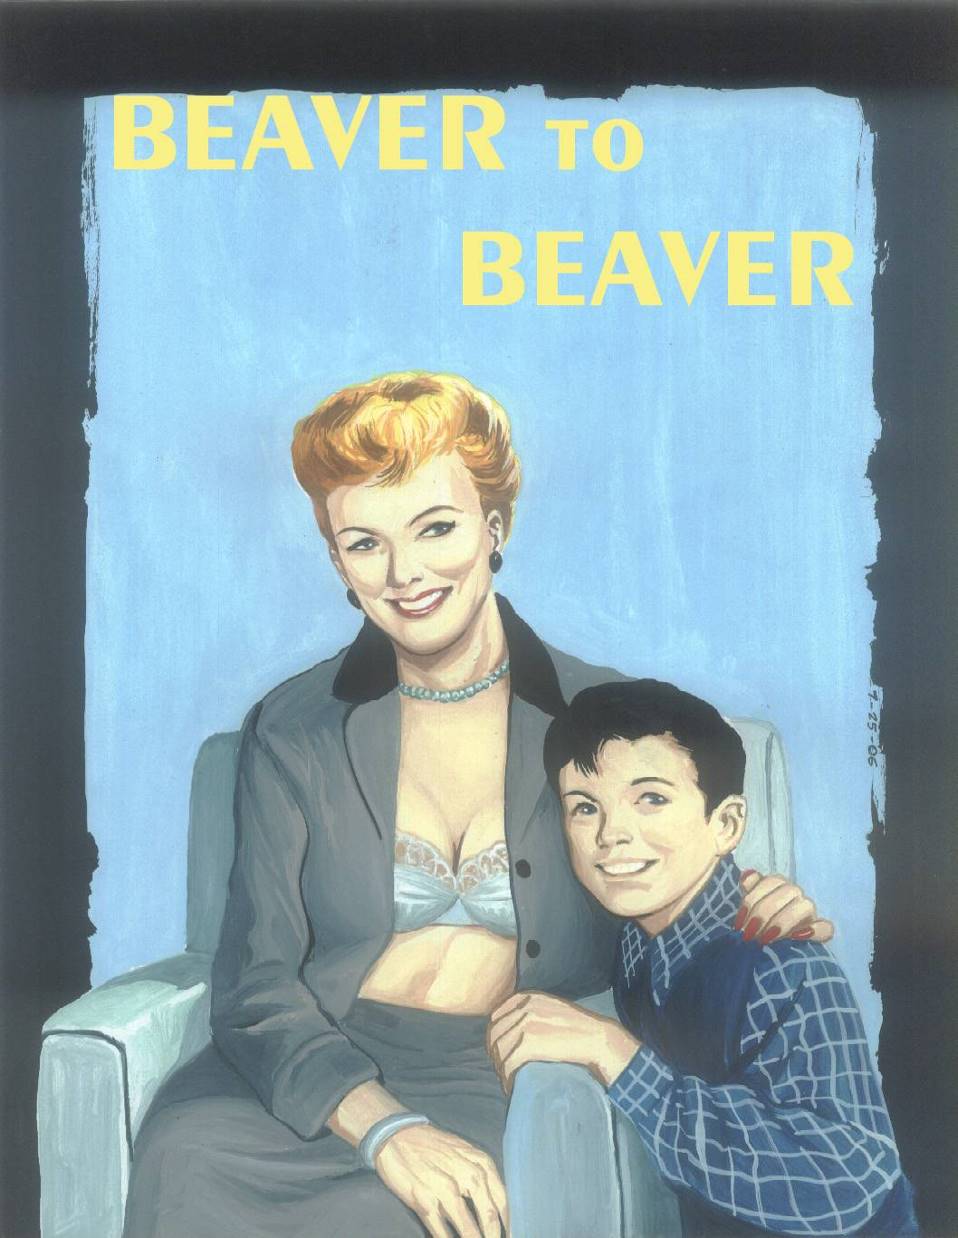 Leave It To Beaver Porn Parody